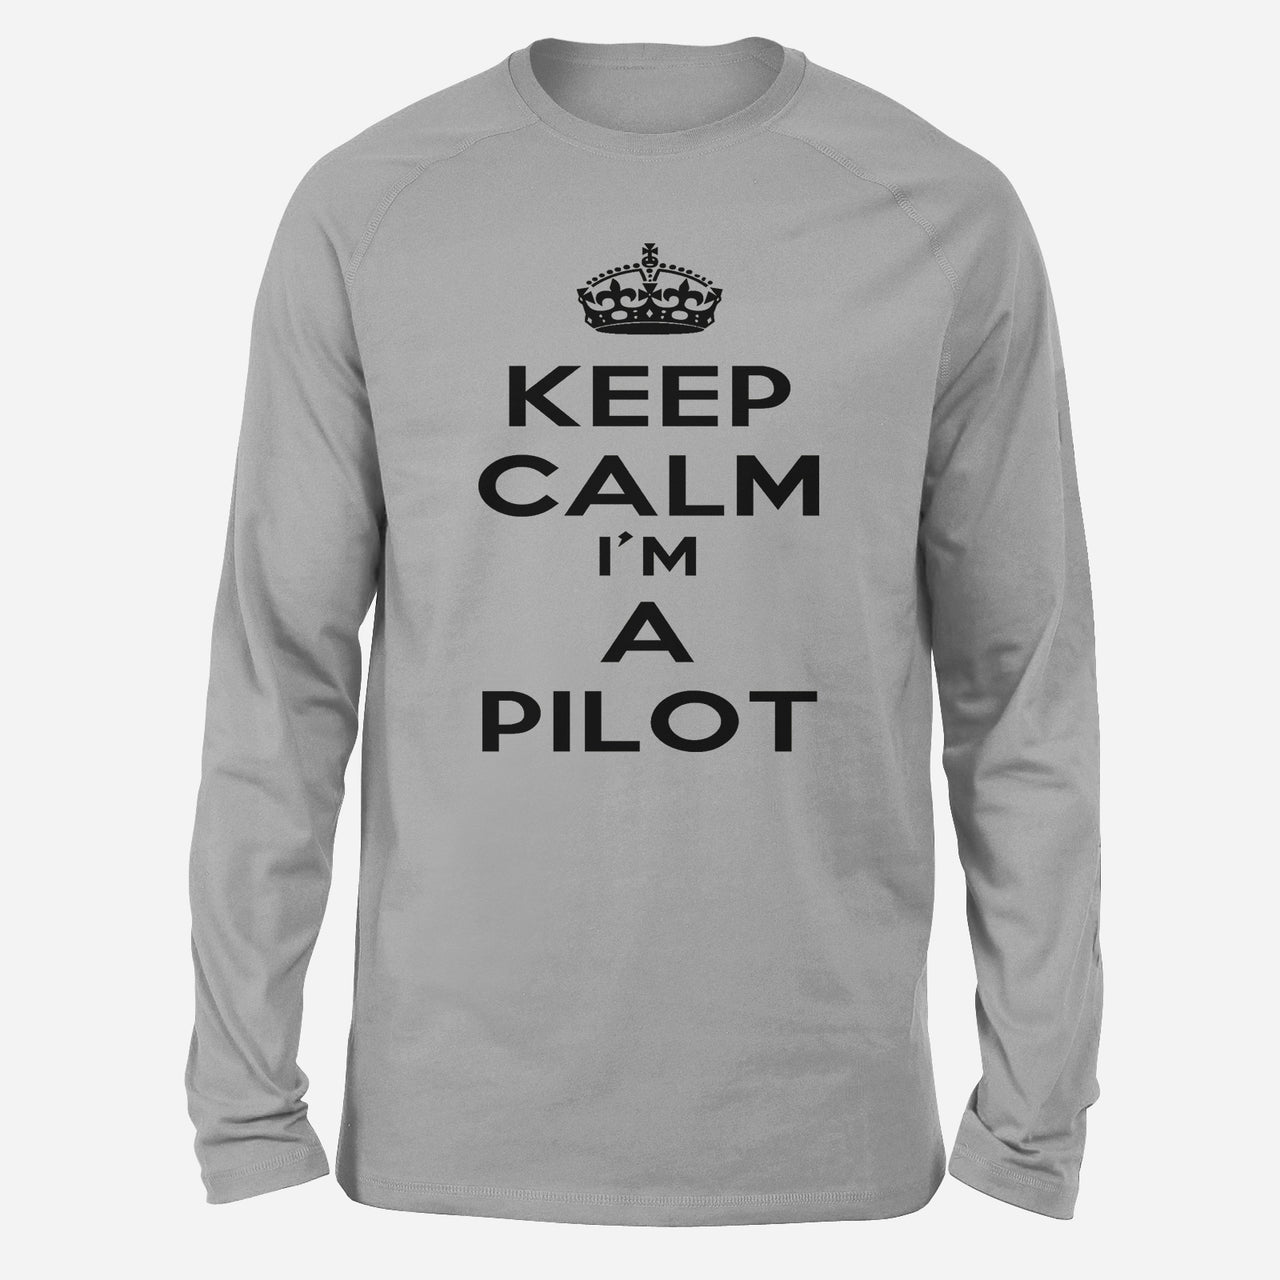 Keep Calm I'm a Pilot Designed Long-Sleeve T-Shirts